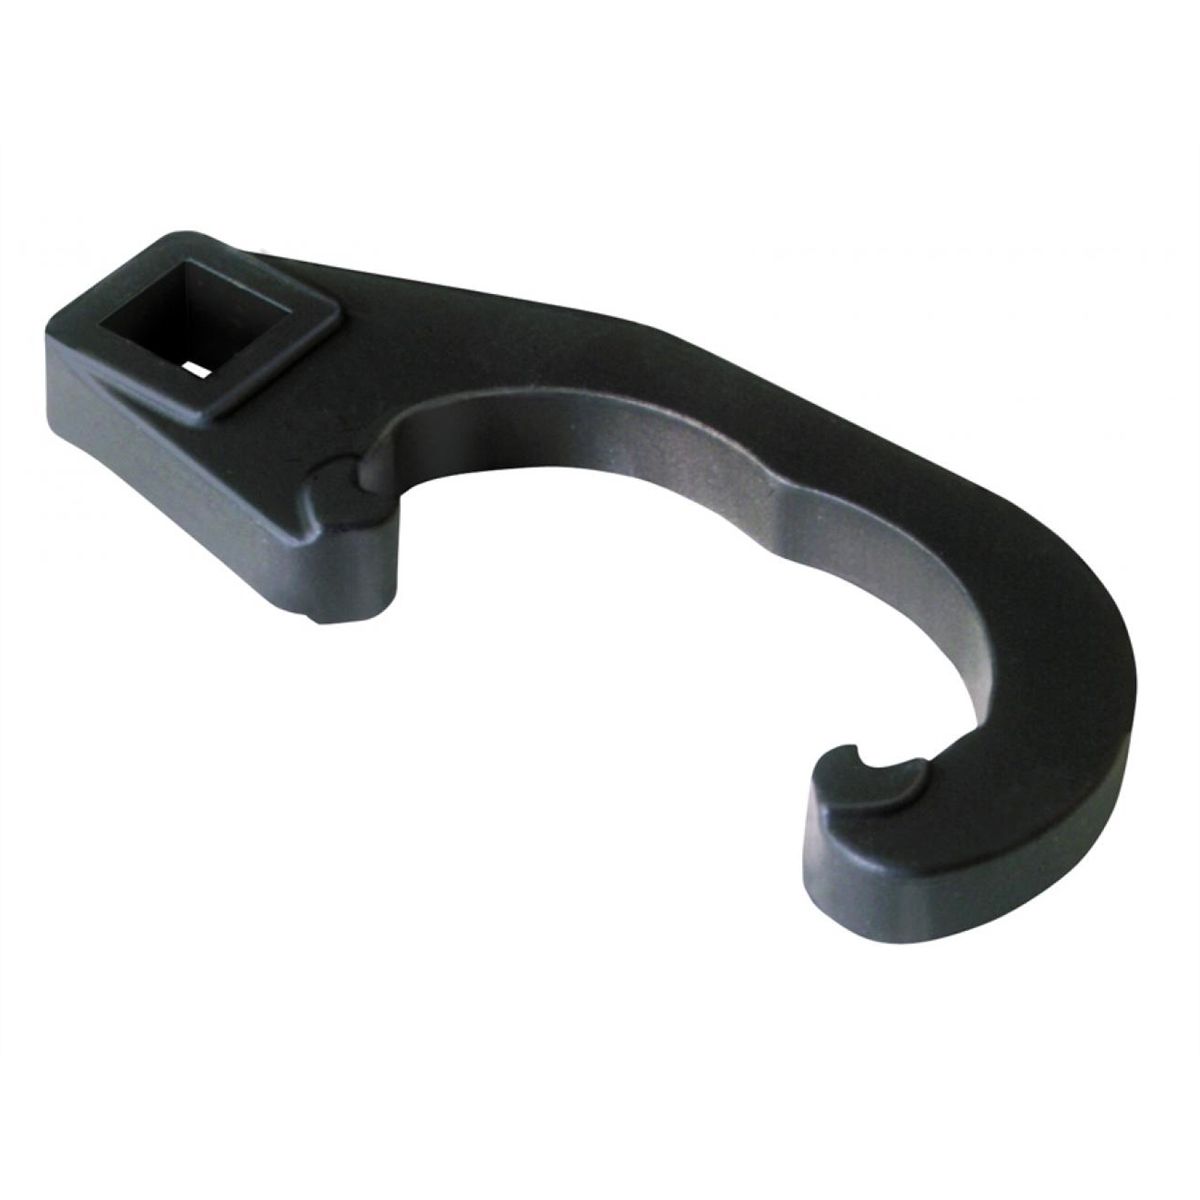 Pitman Arm / Tie Rod Adjusting Tool for Ford 3/4-Ton & 1-Ton Tru